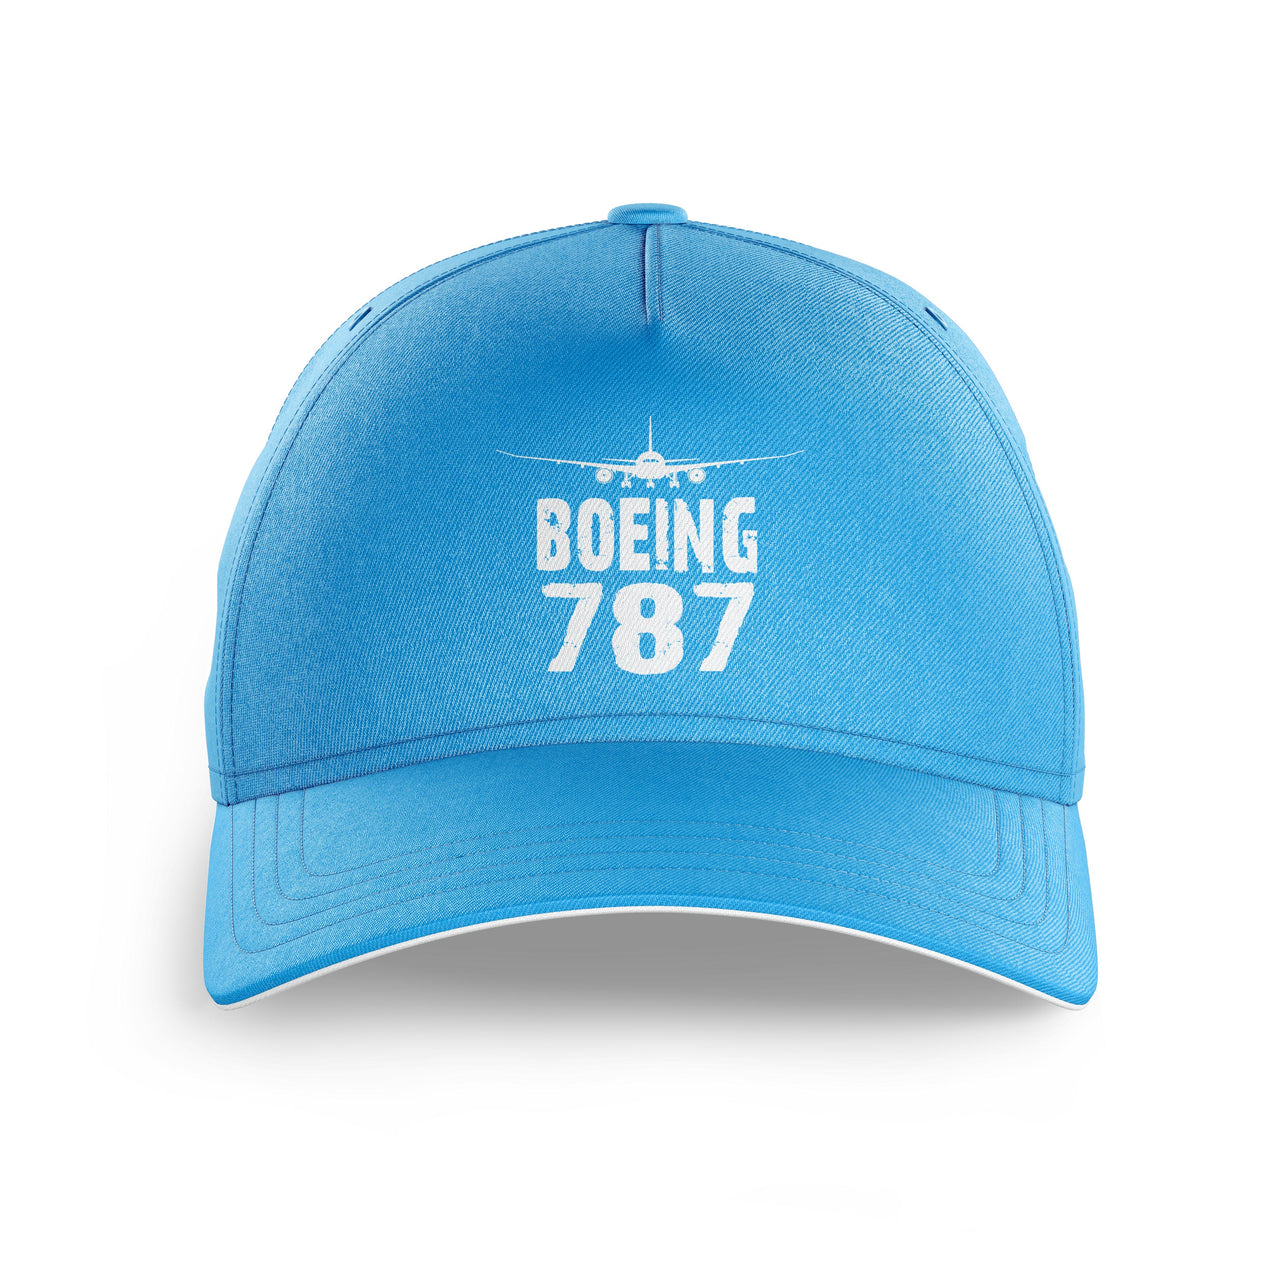 Boeing 787 & Plane Printed Hats